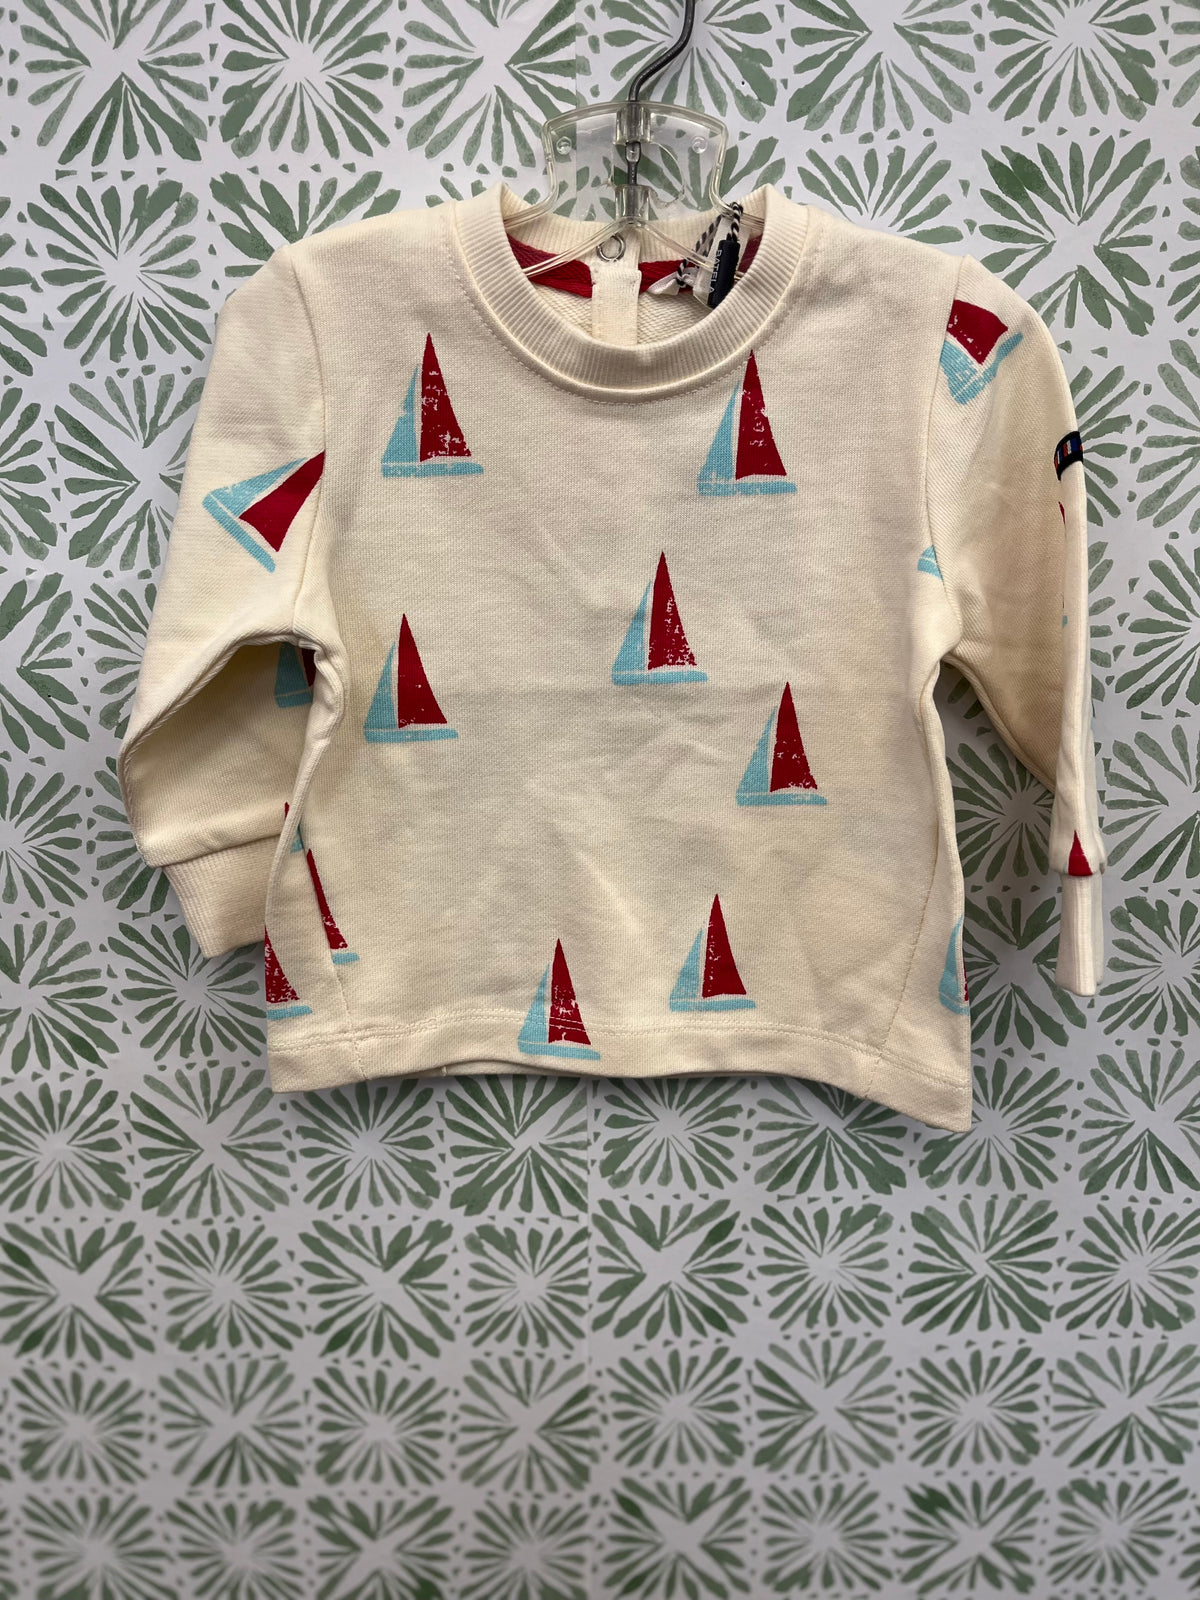 Batela Long Sleeve Cream Sweatshirt with Red and Blue Sailboats